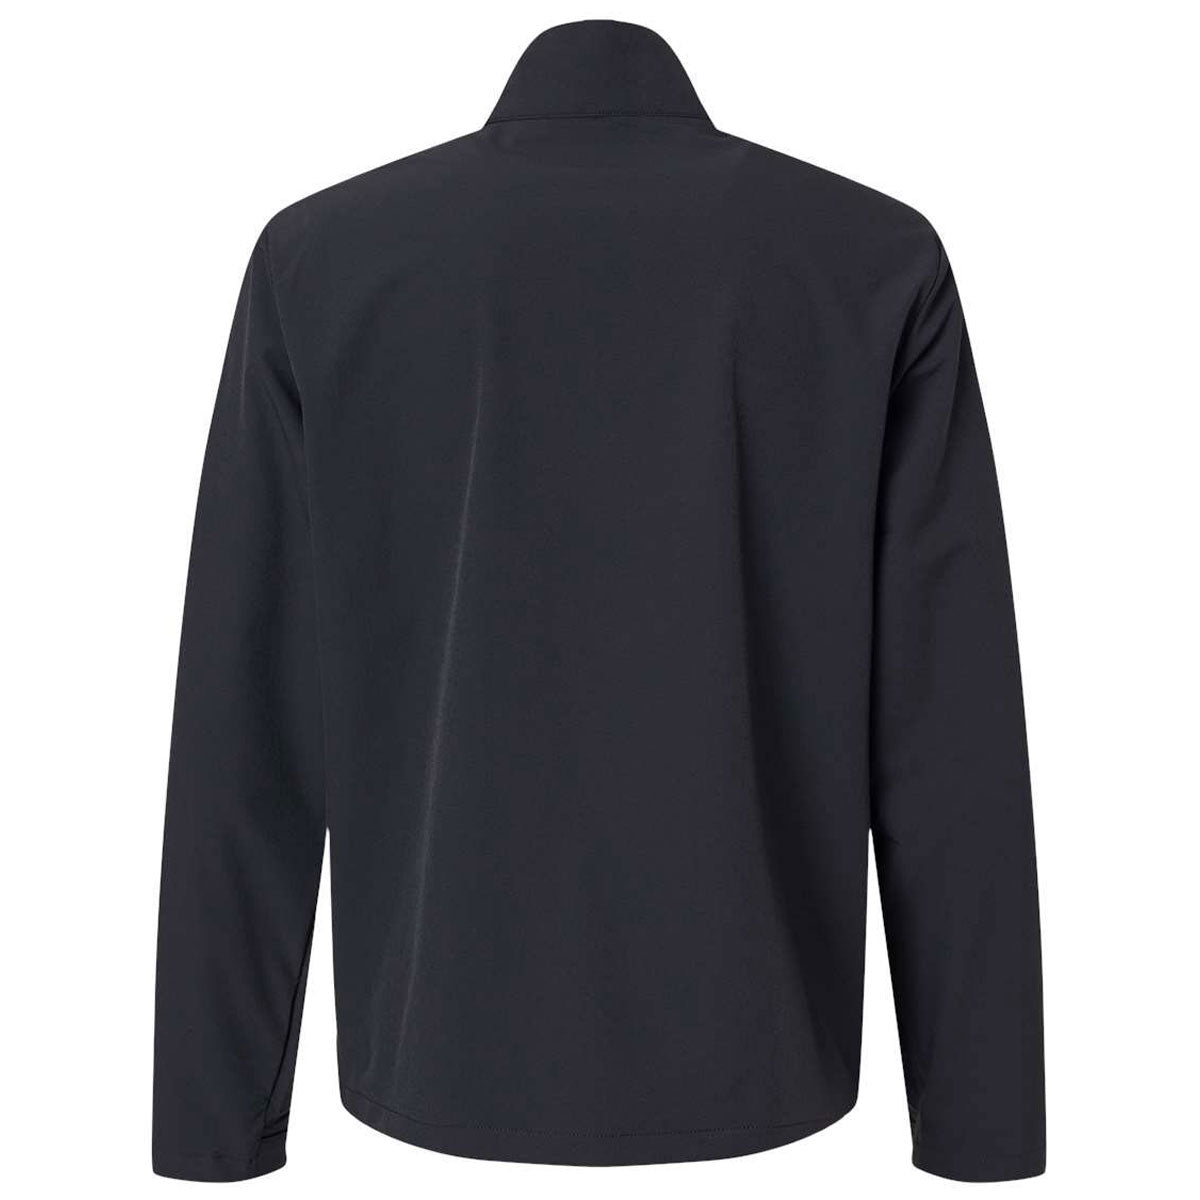 Buy Jet Black Jackets & Coats for Men by PERFORMAX Online